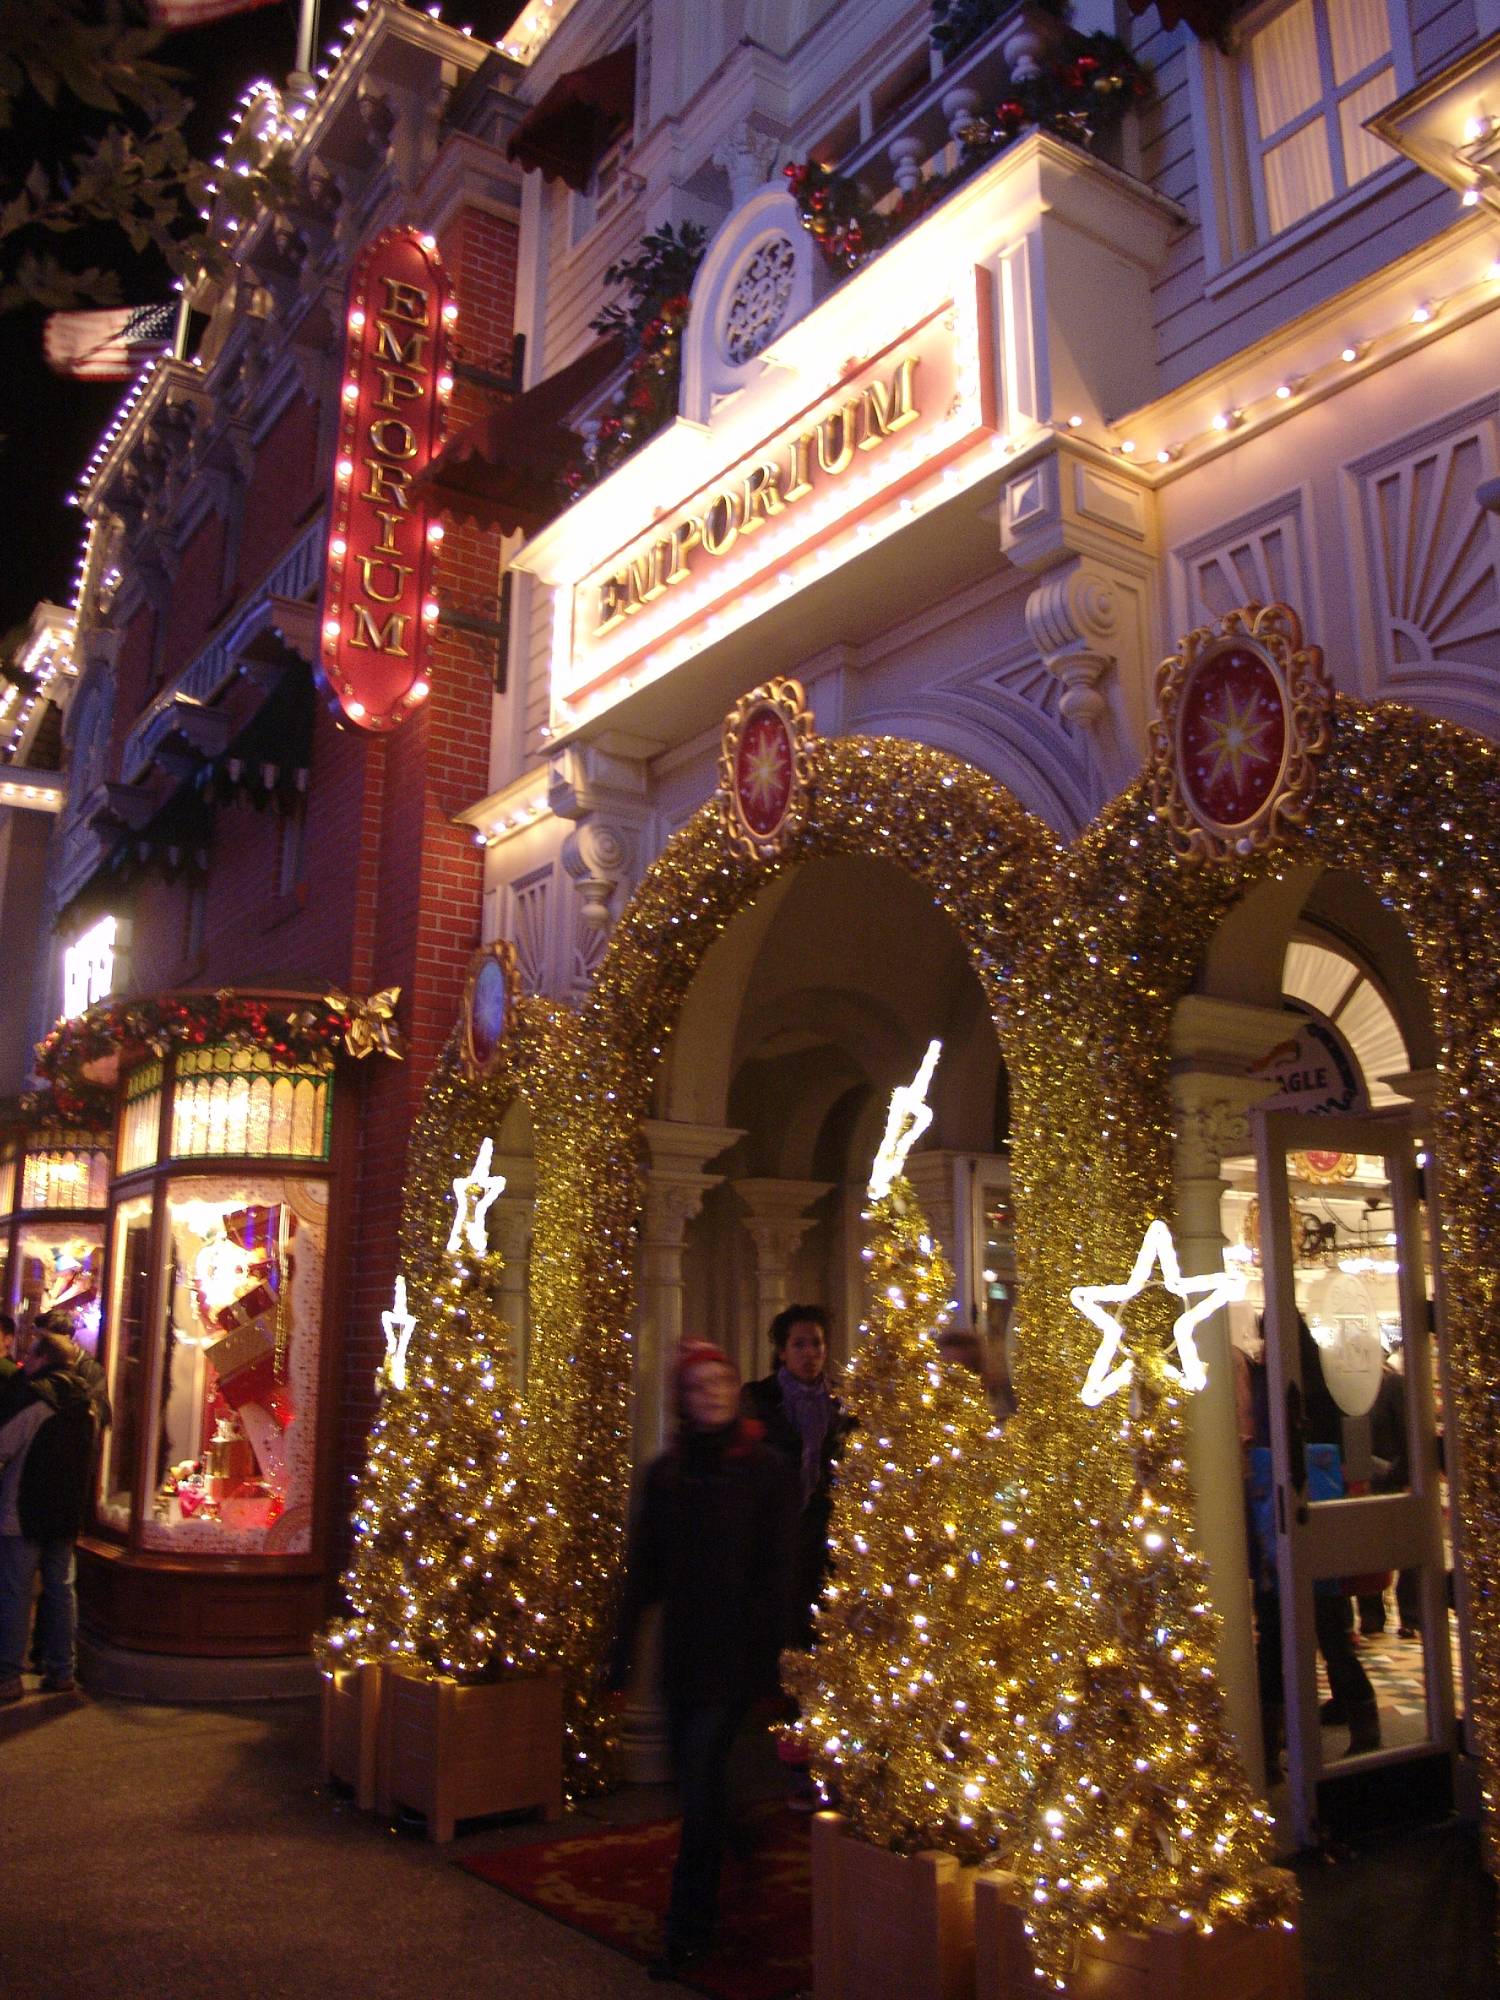 Disneyland Paris - Main Street at Christmas at night